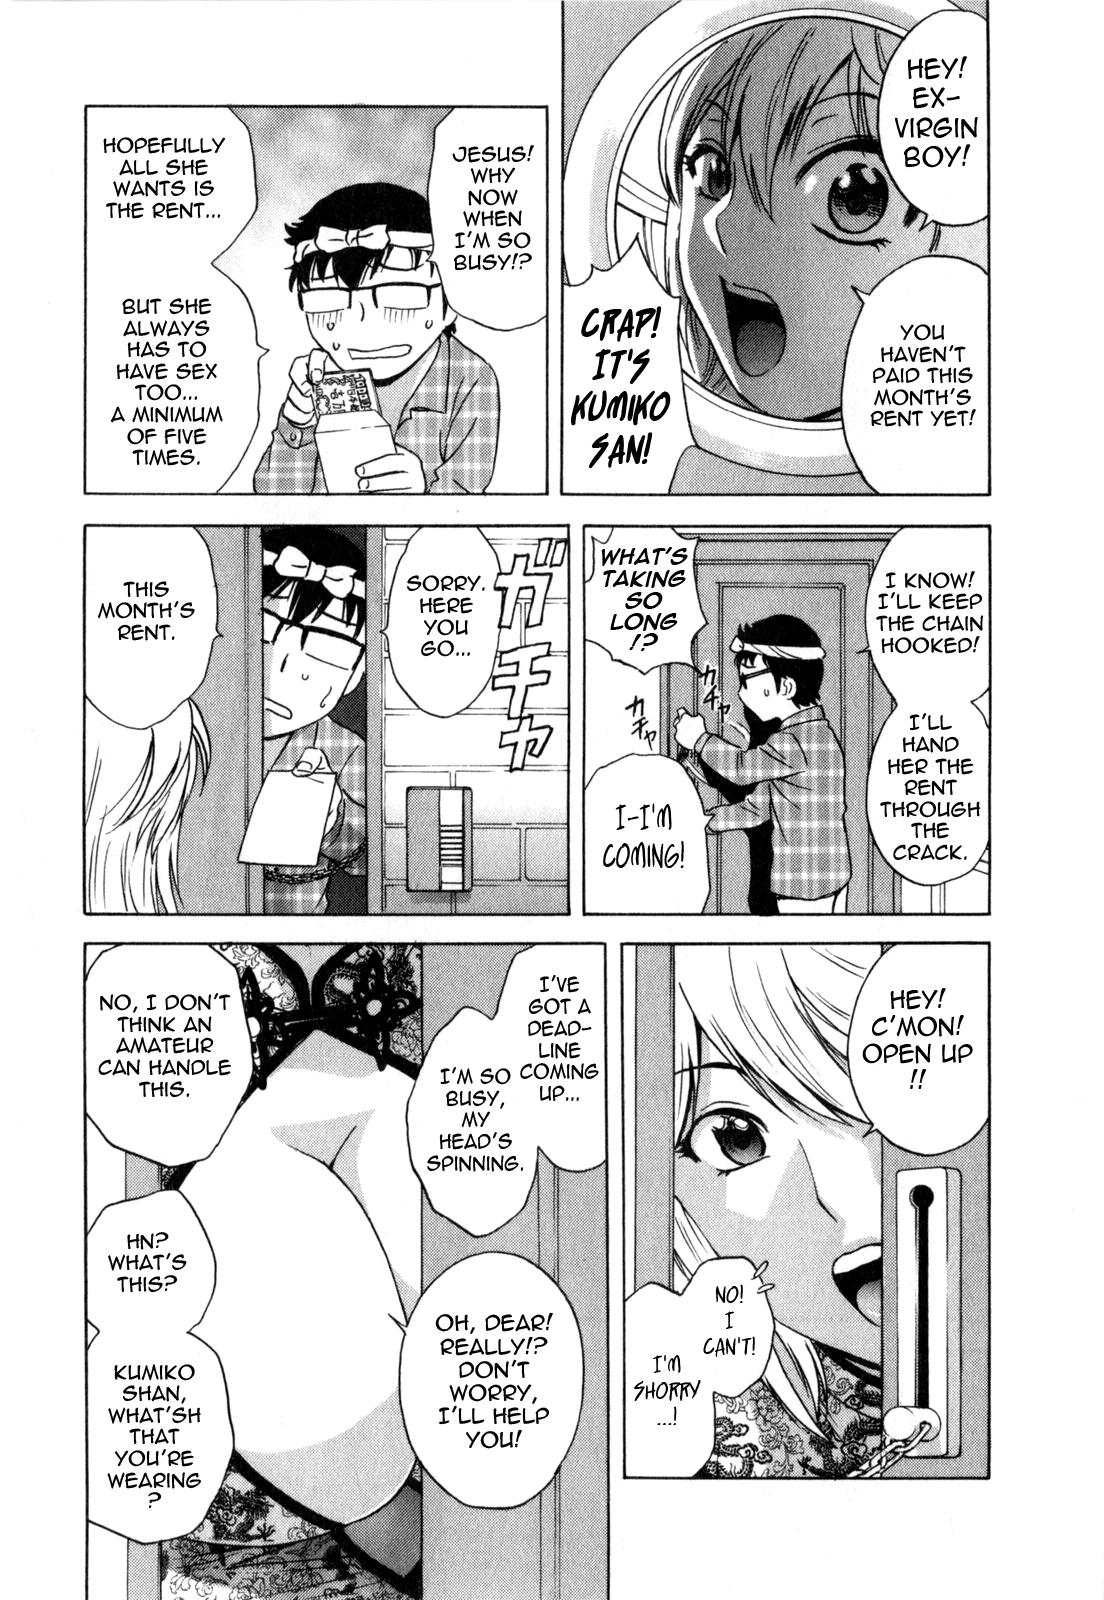 Life with Married Women Just Like a Manga 3 108